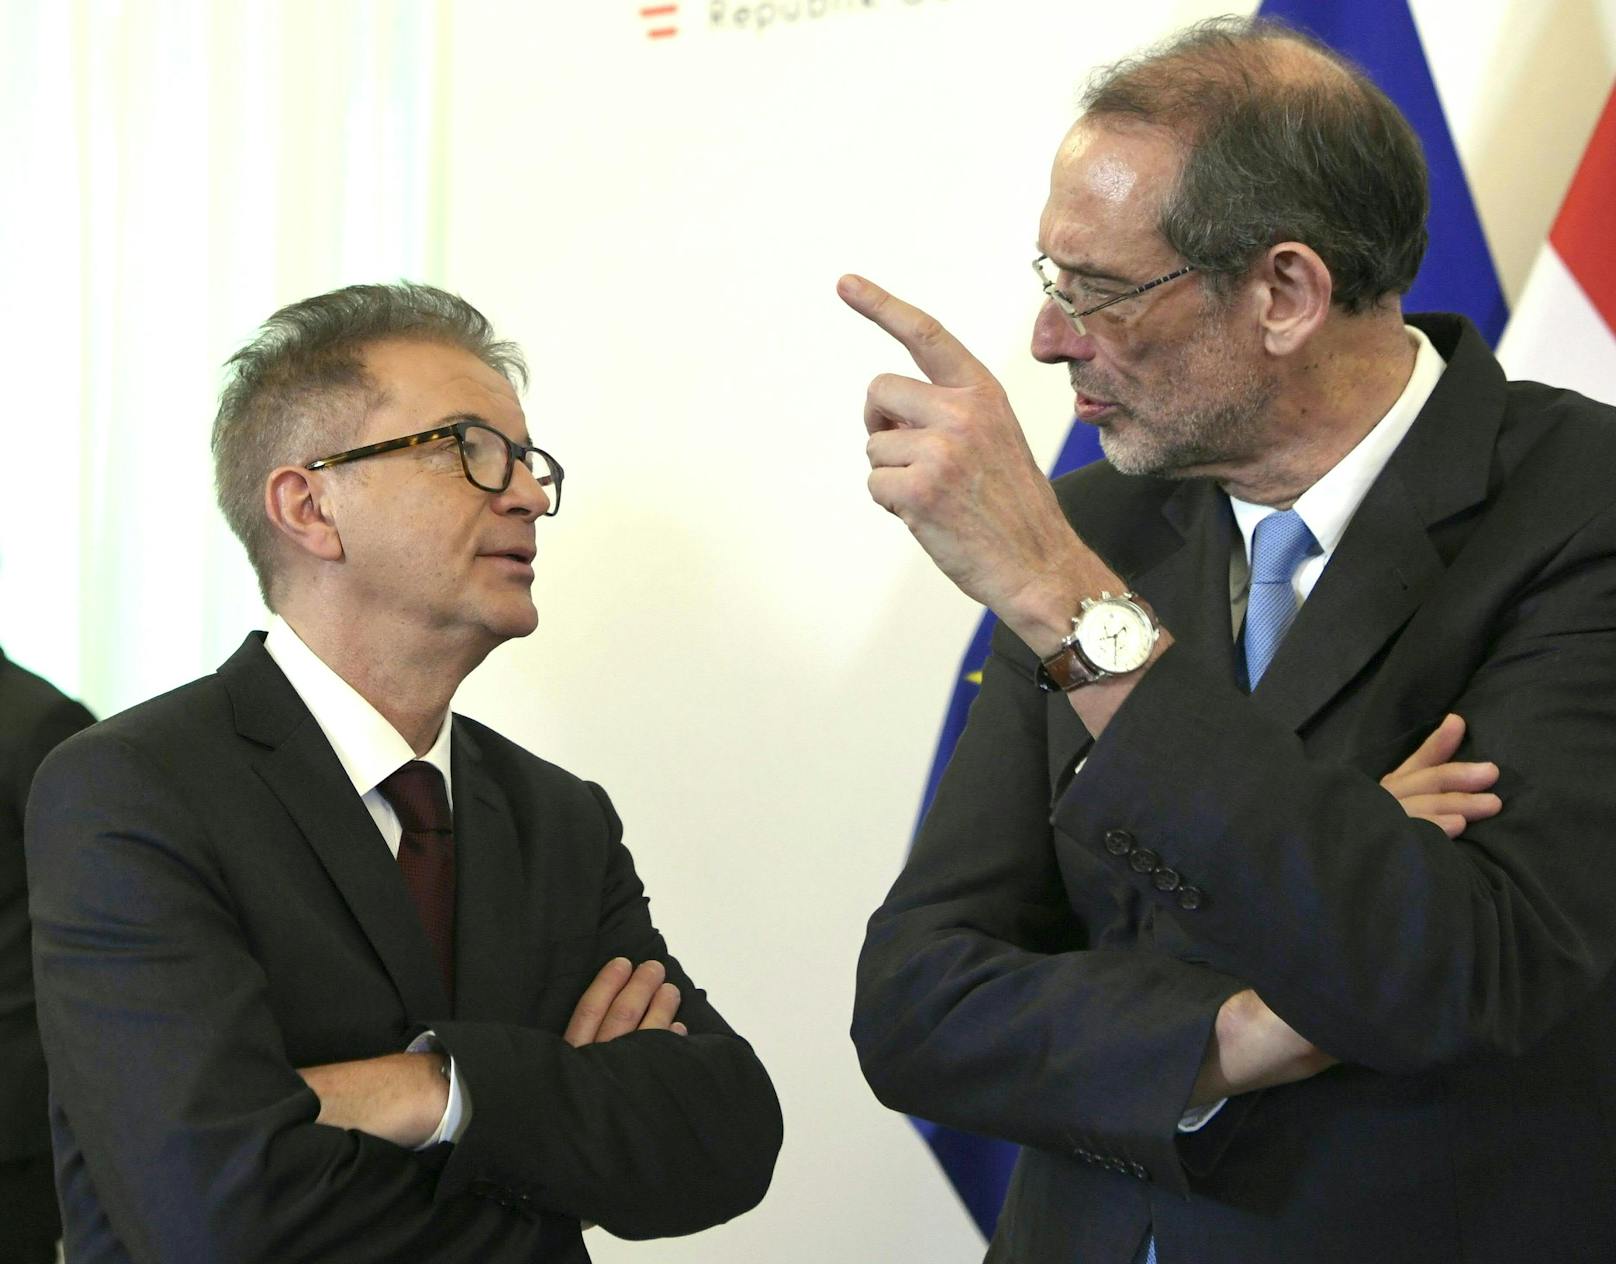 Gesundheitsminister Rudolf Anschober (Grüne) und Bildungsminister Heinz Faßmann (ÖVP).